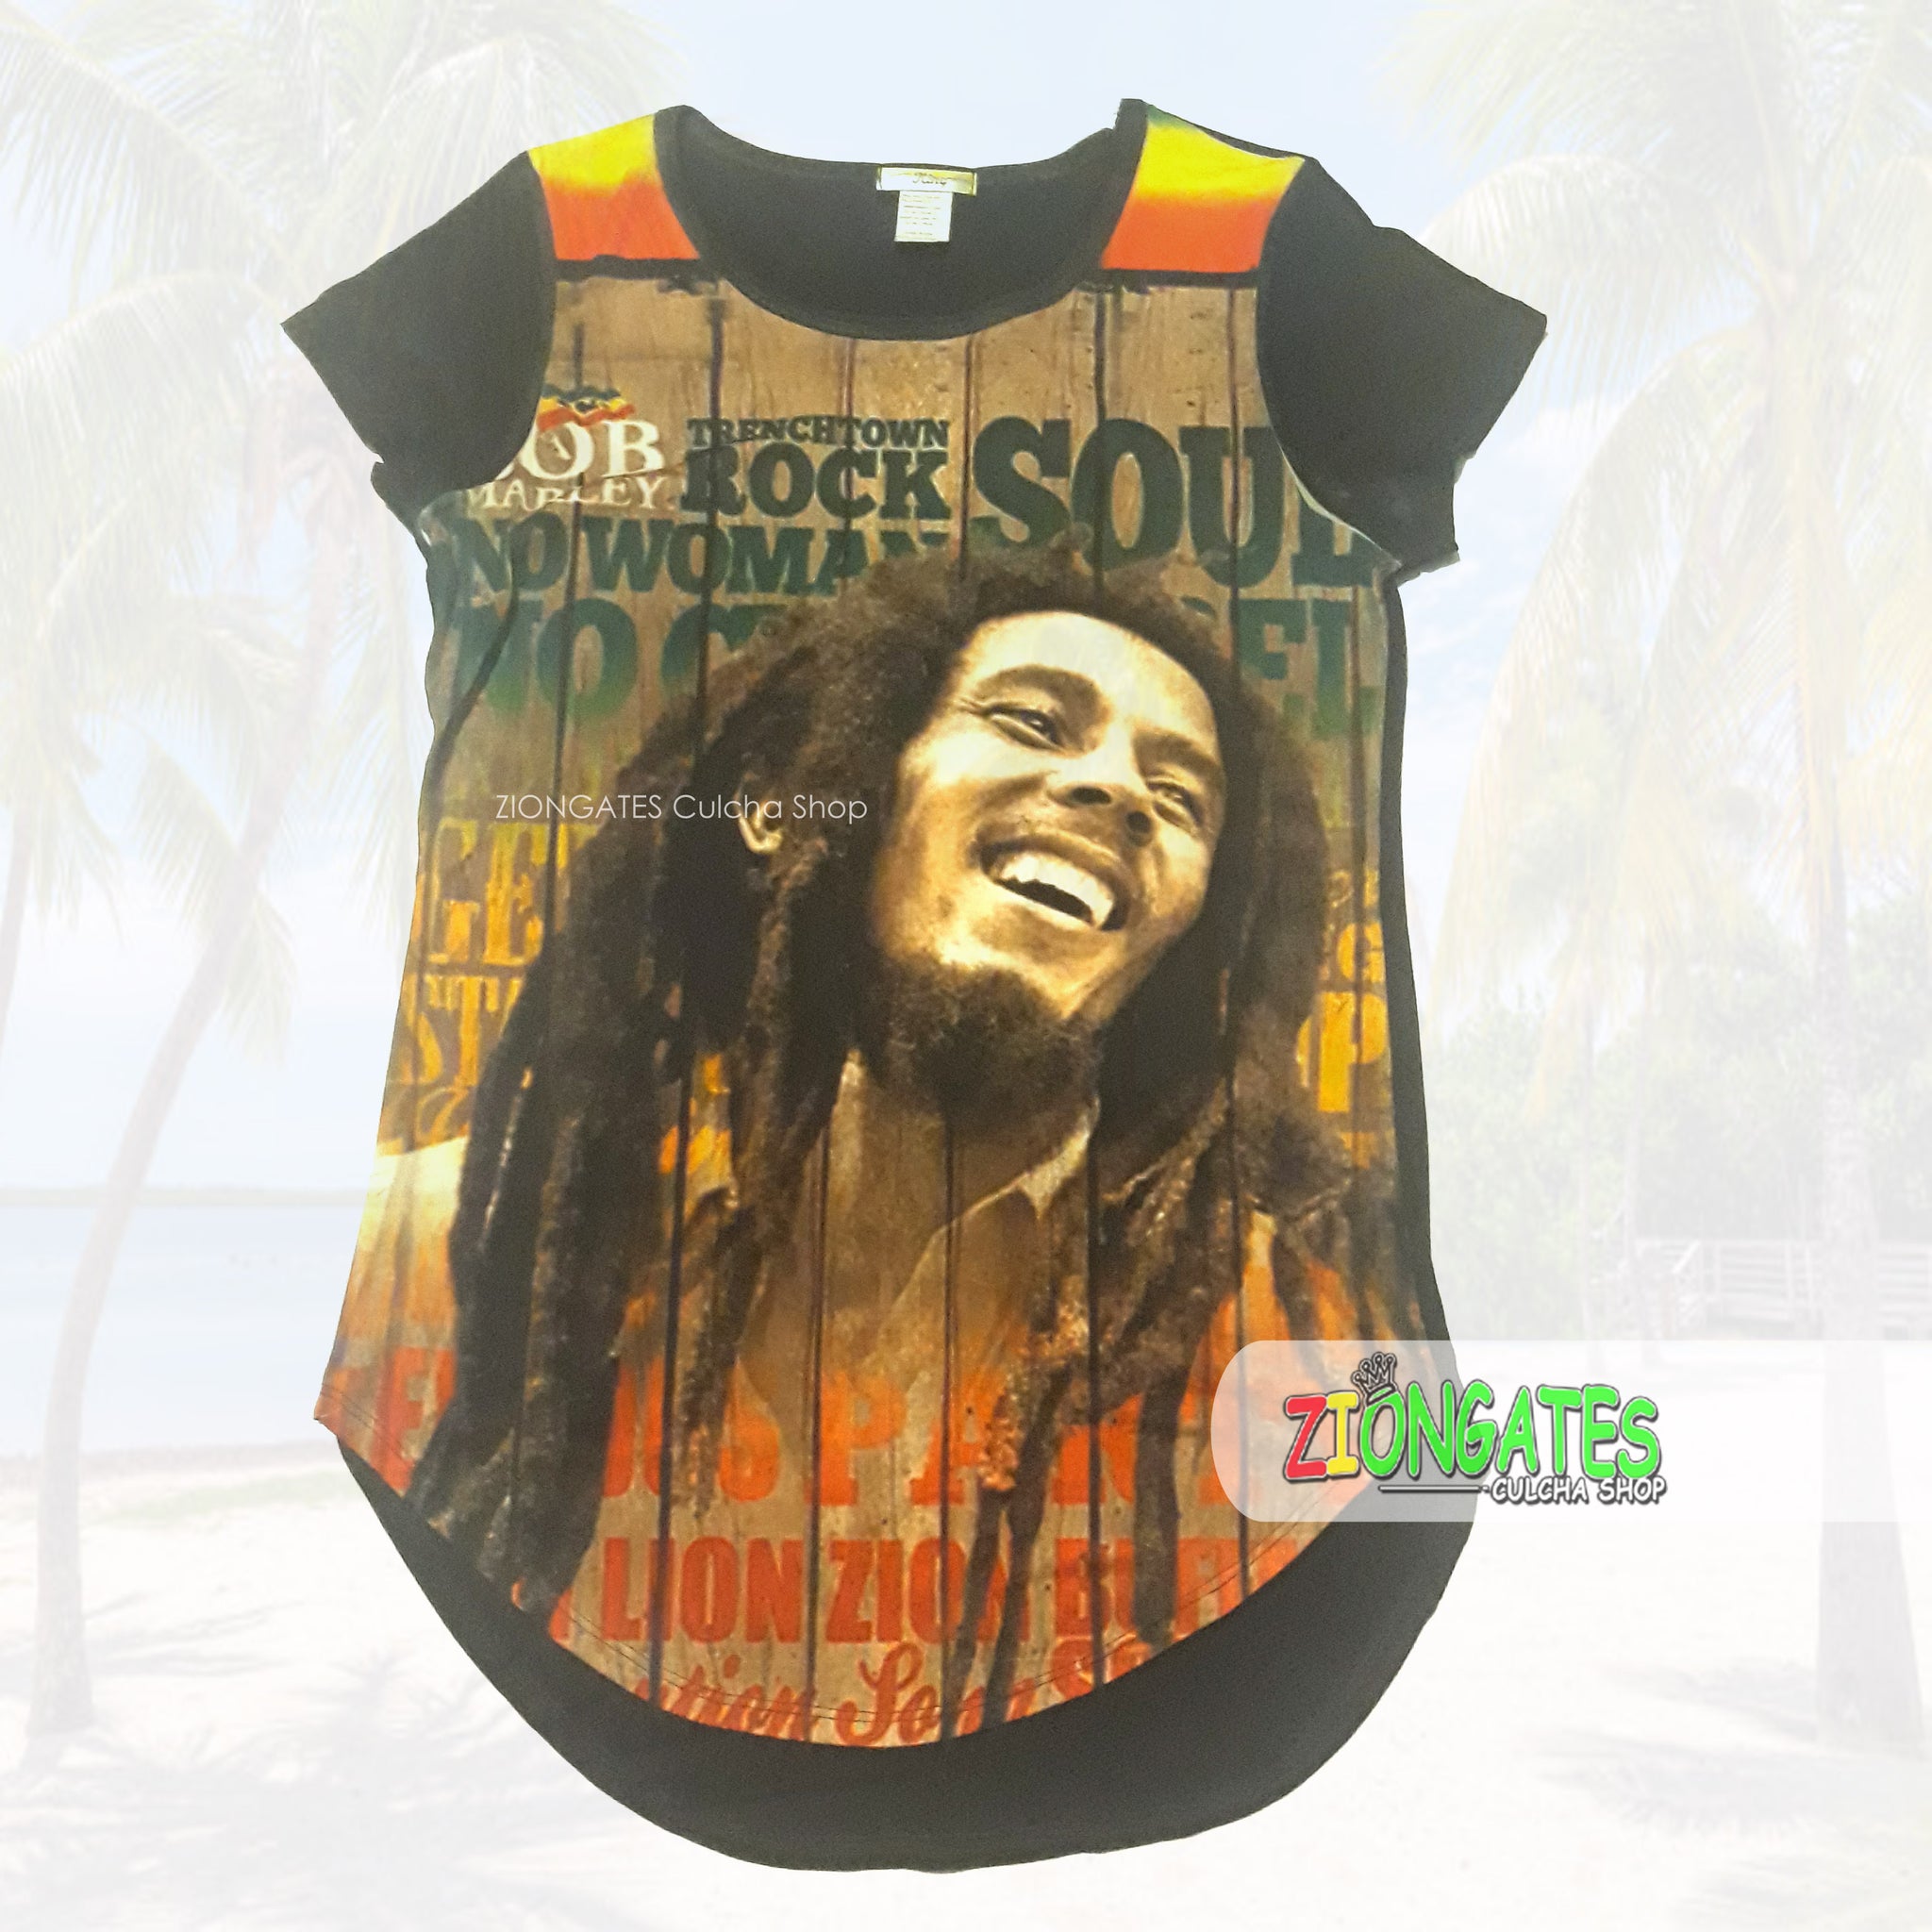 WOMENS Bob Marley Trench town Rock Spandex Shirt